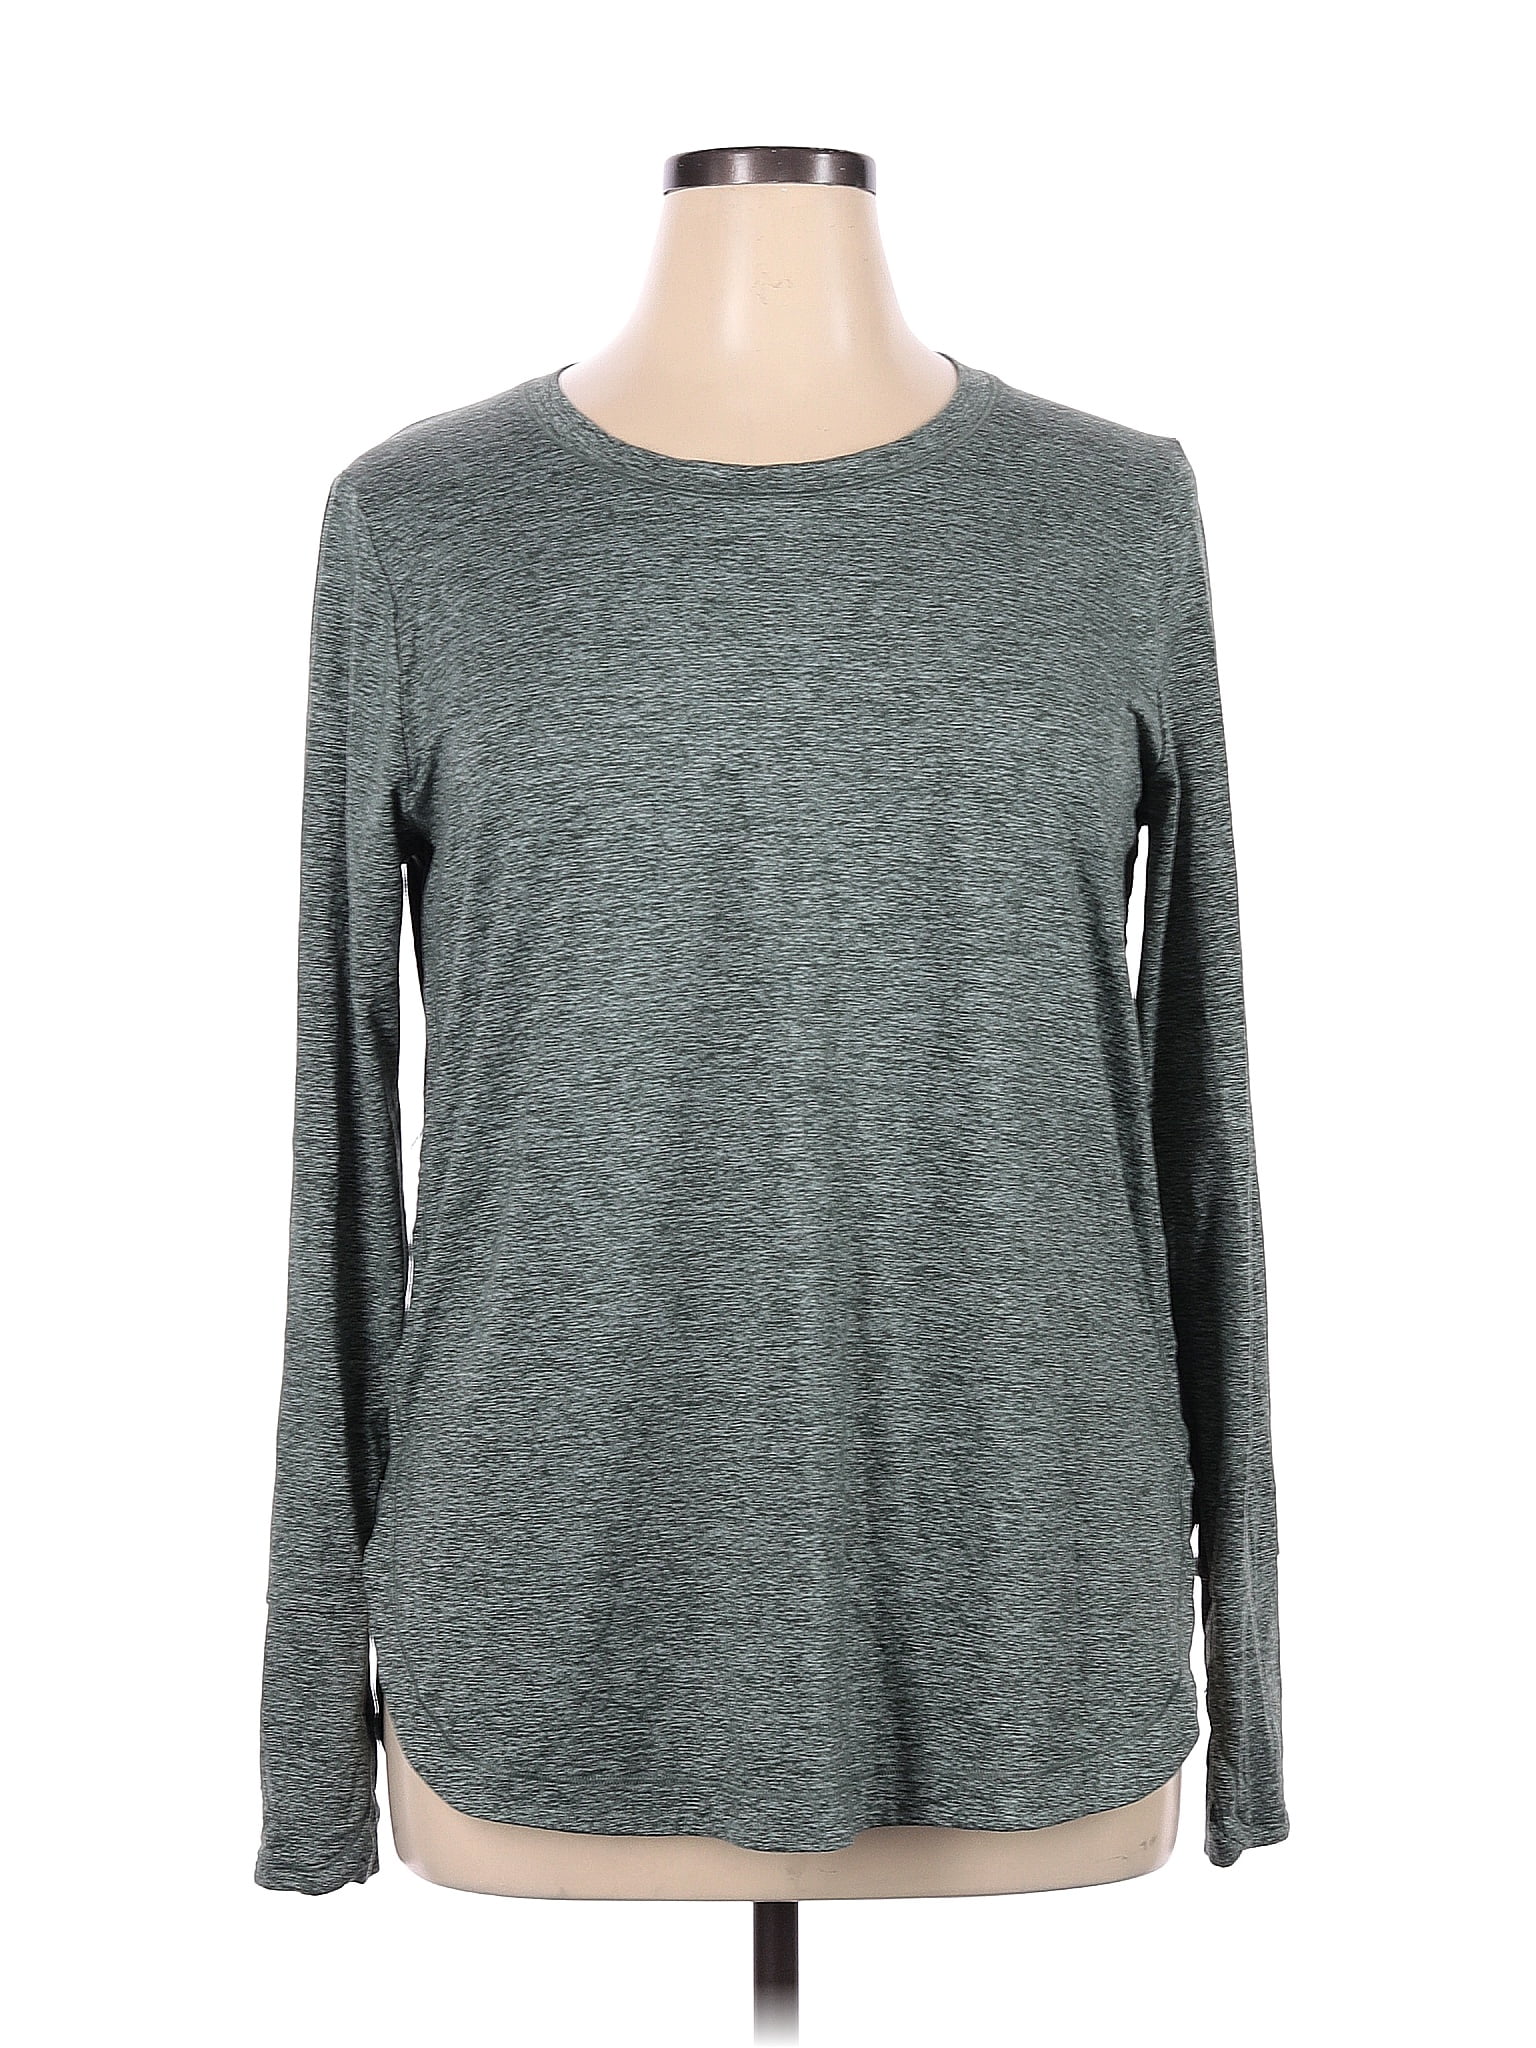 Athleta Marled Gray Long Sleeve T-Shirt Size XL - 46% off | thredUP